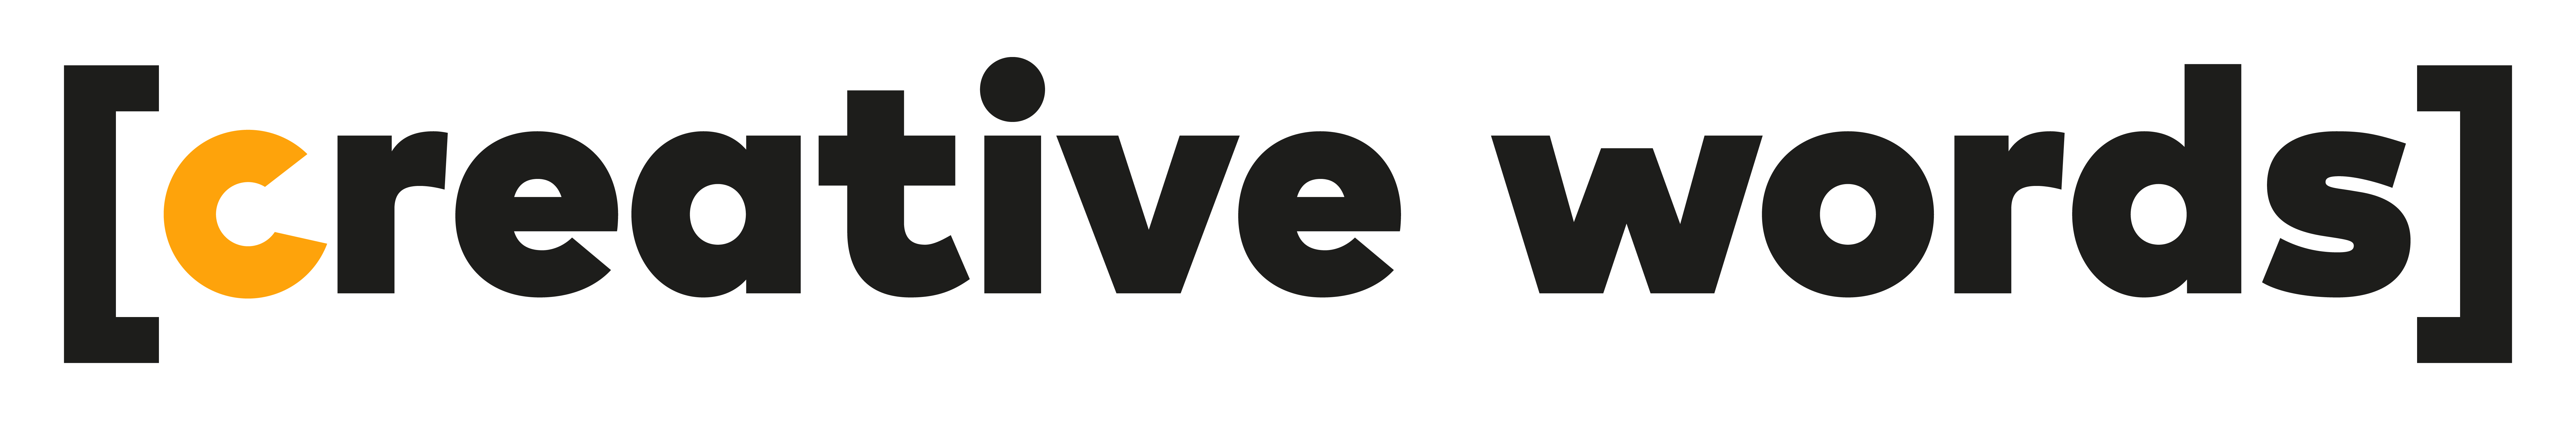 Creative Words Logo